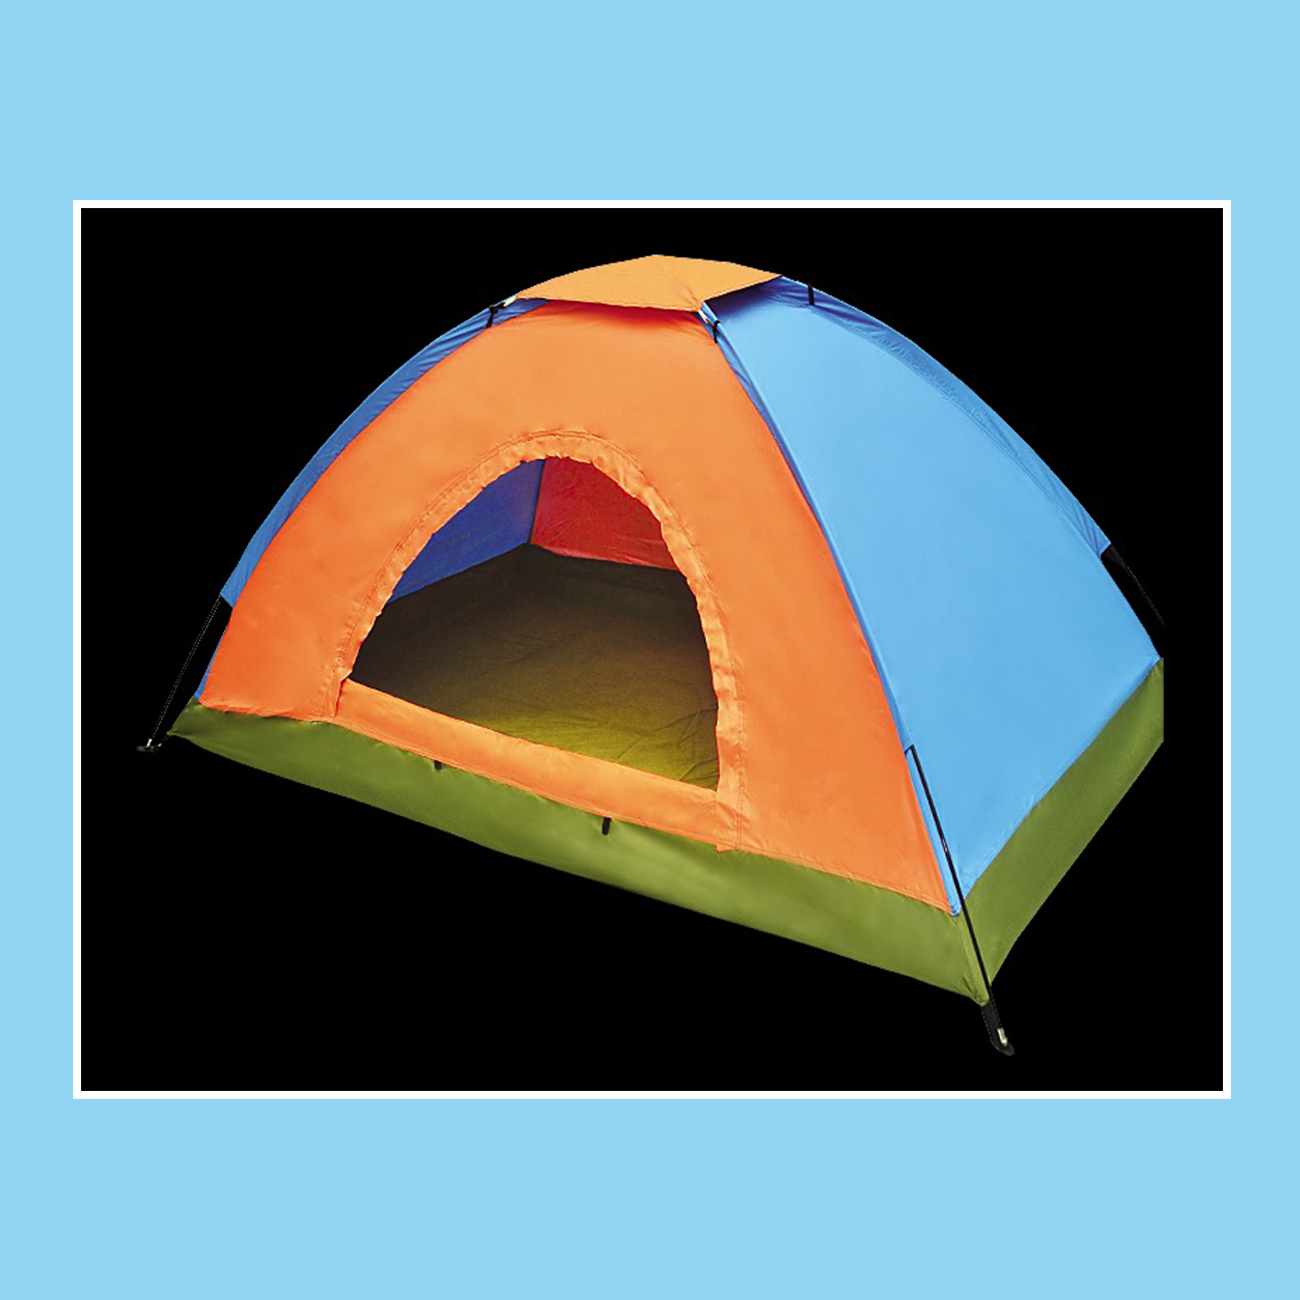 Portable tent